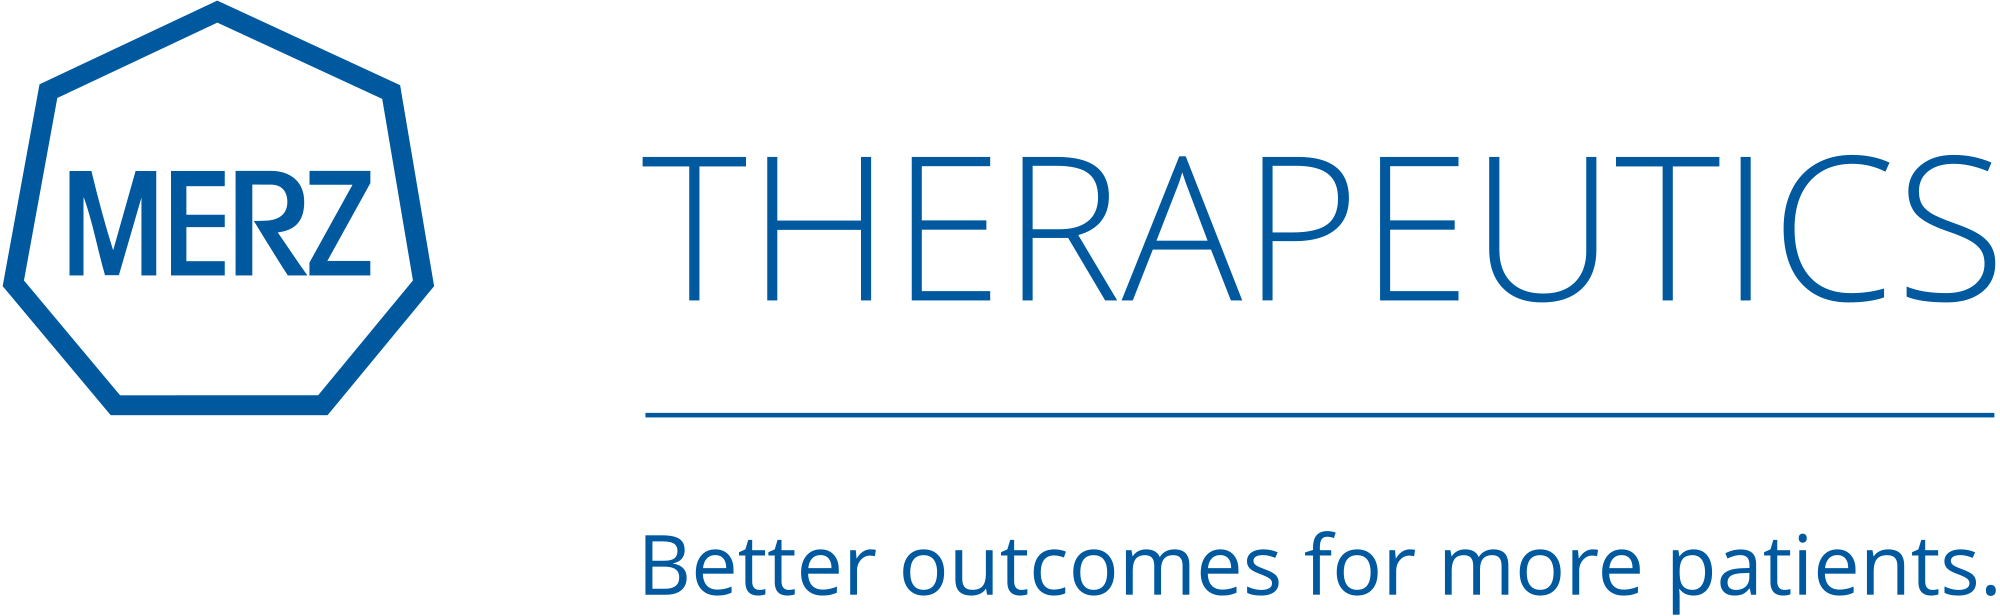 Merz Therapeutics logo